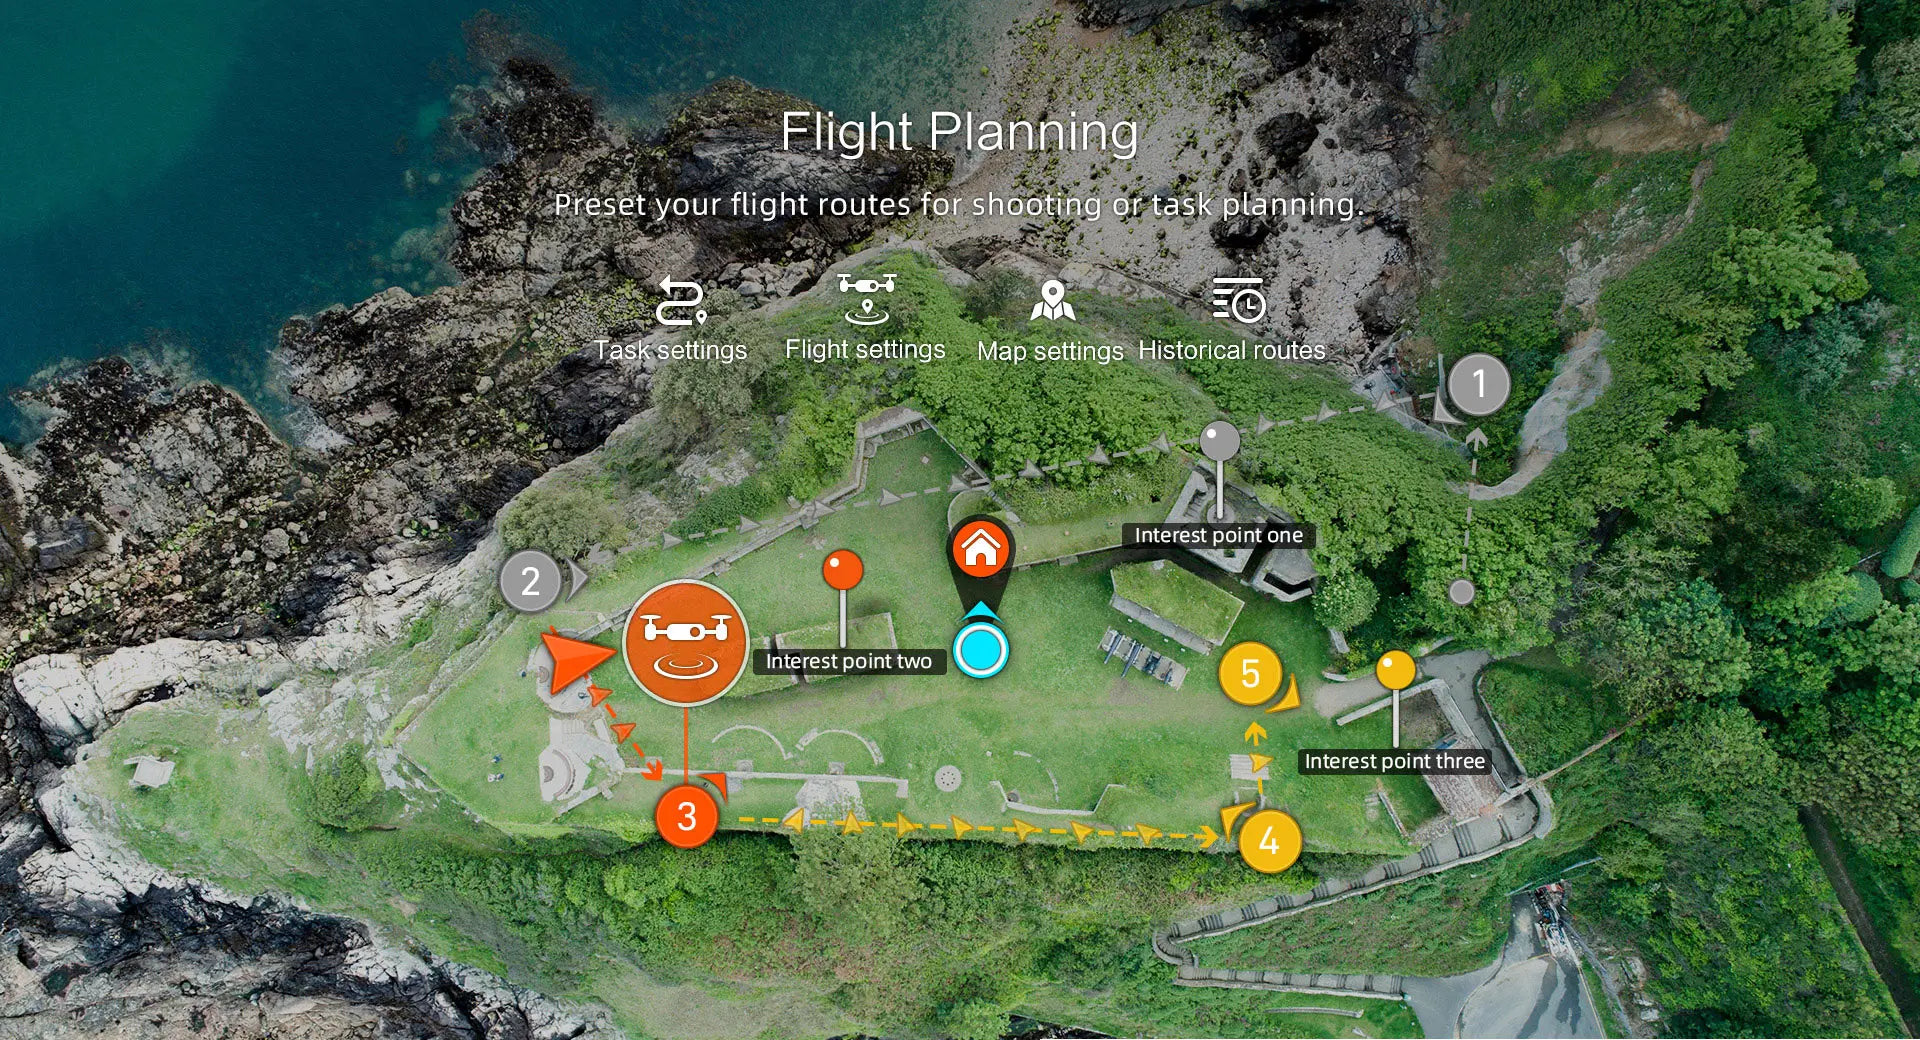 FIMI x8se 2022 V2 Camera Drone, Flight Planning Preset your flight routes for shooting or taskplanning 2 Task settings Flight settings Map